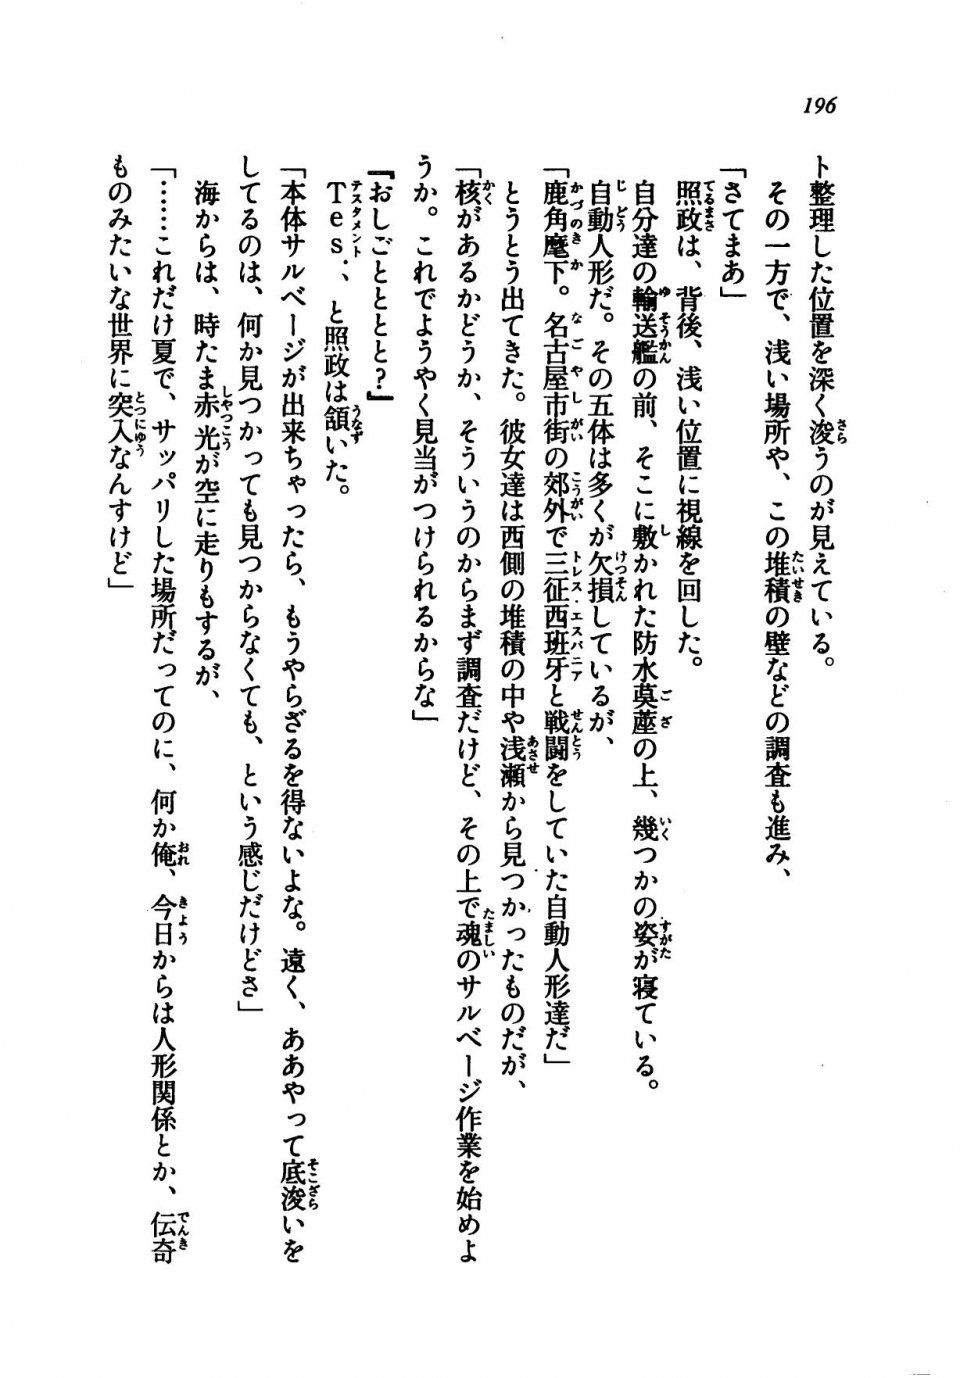 Kyoukai Senjou no Horizon LN Vol 21(8C) Part 1 - Photo #195